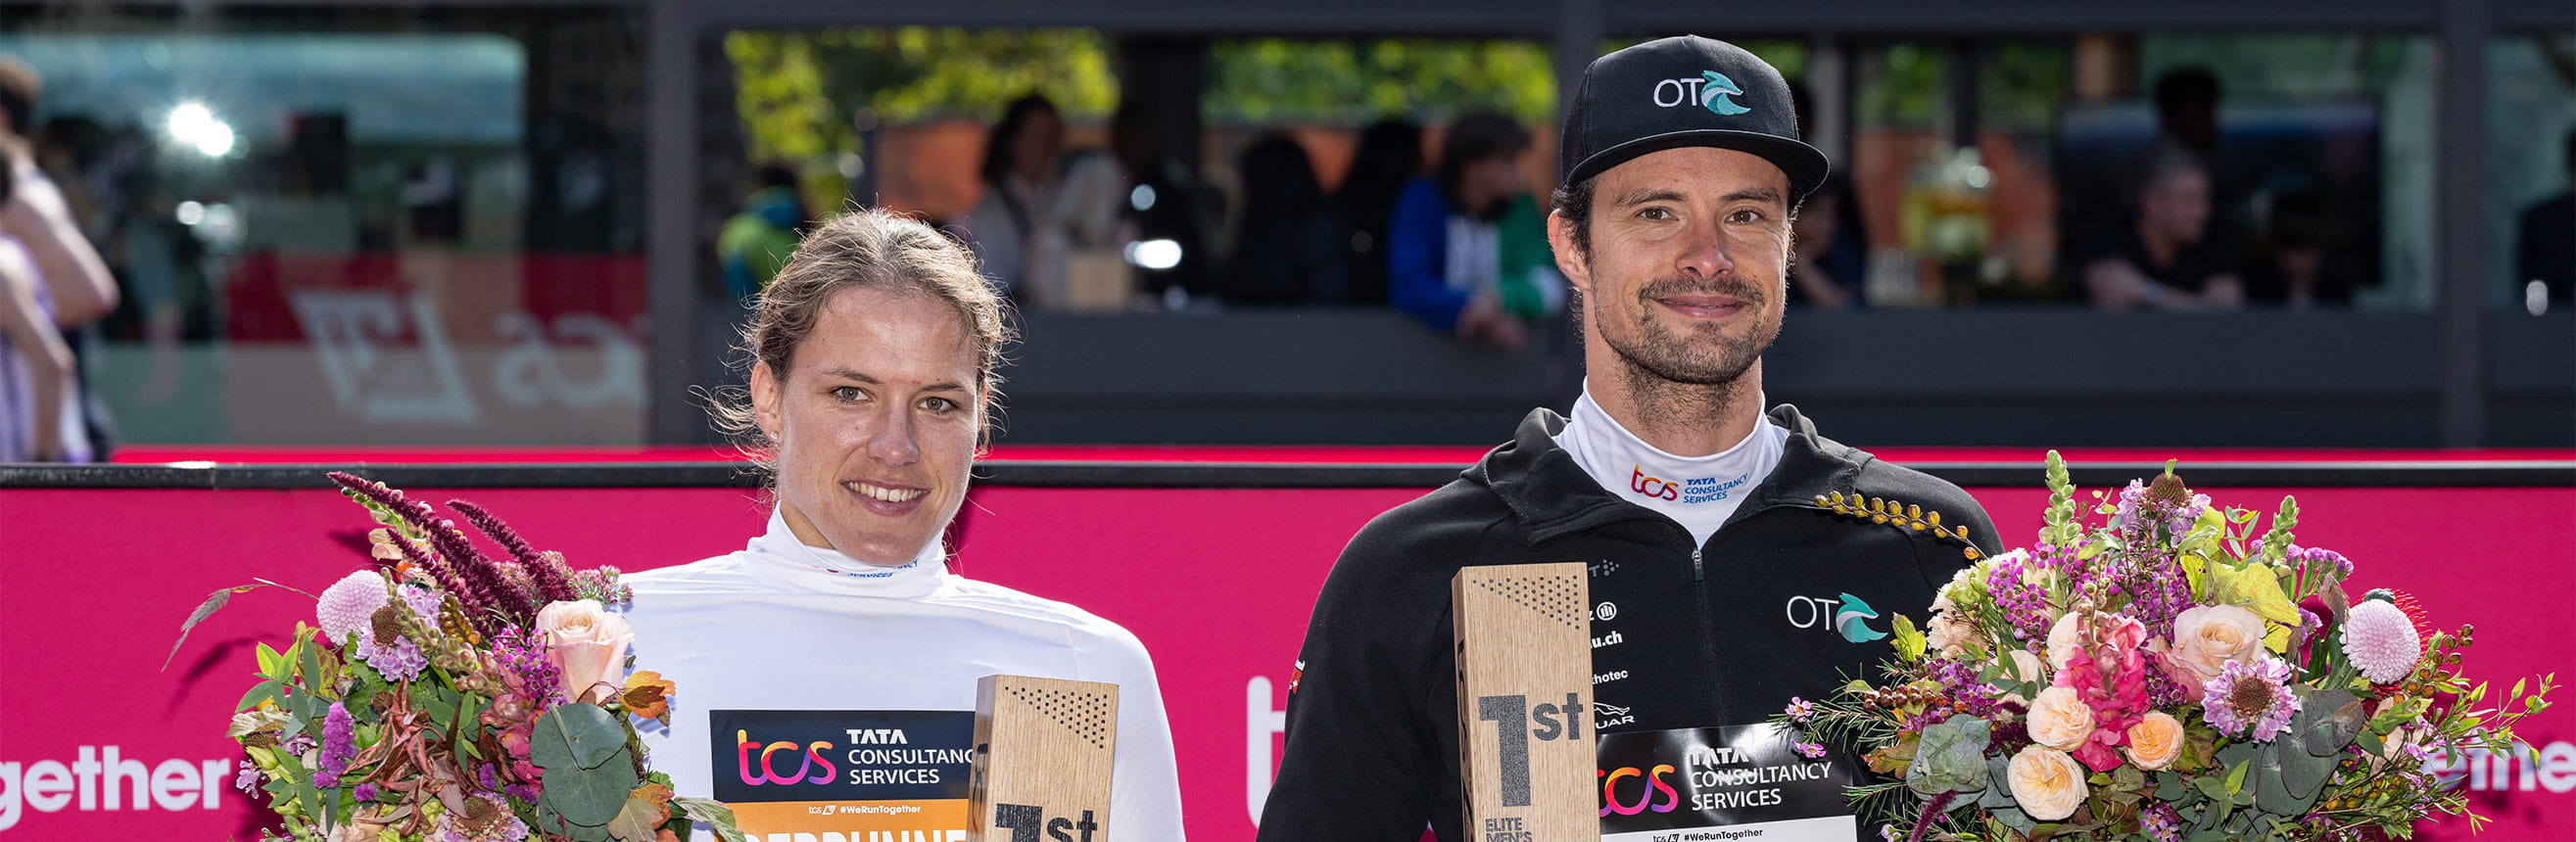 Catherine Debrunner and Marcel Hug, the winners of the 2022 TCS London Marathon wheelchair races